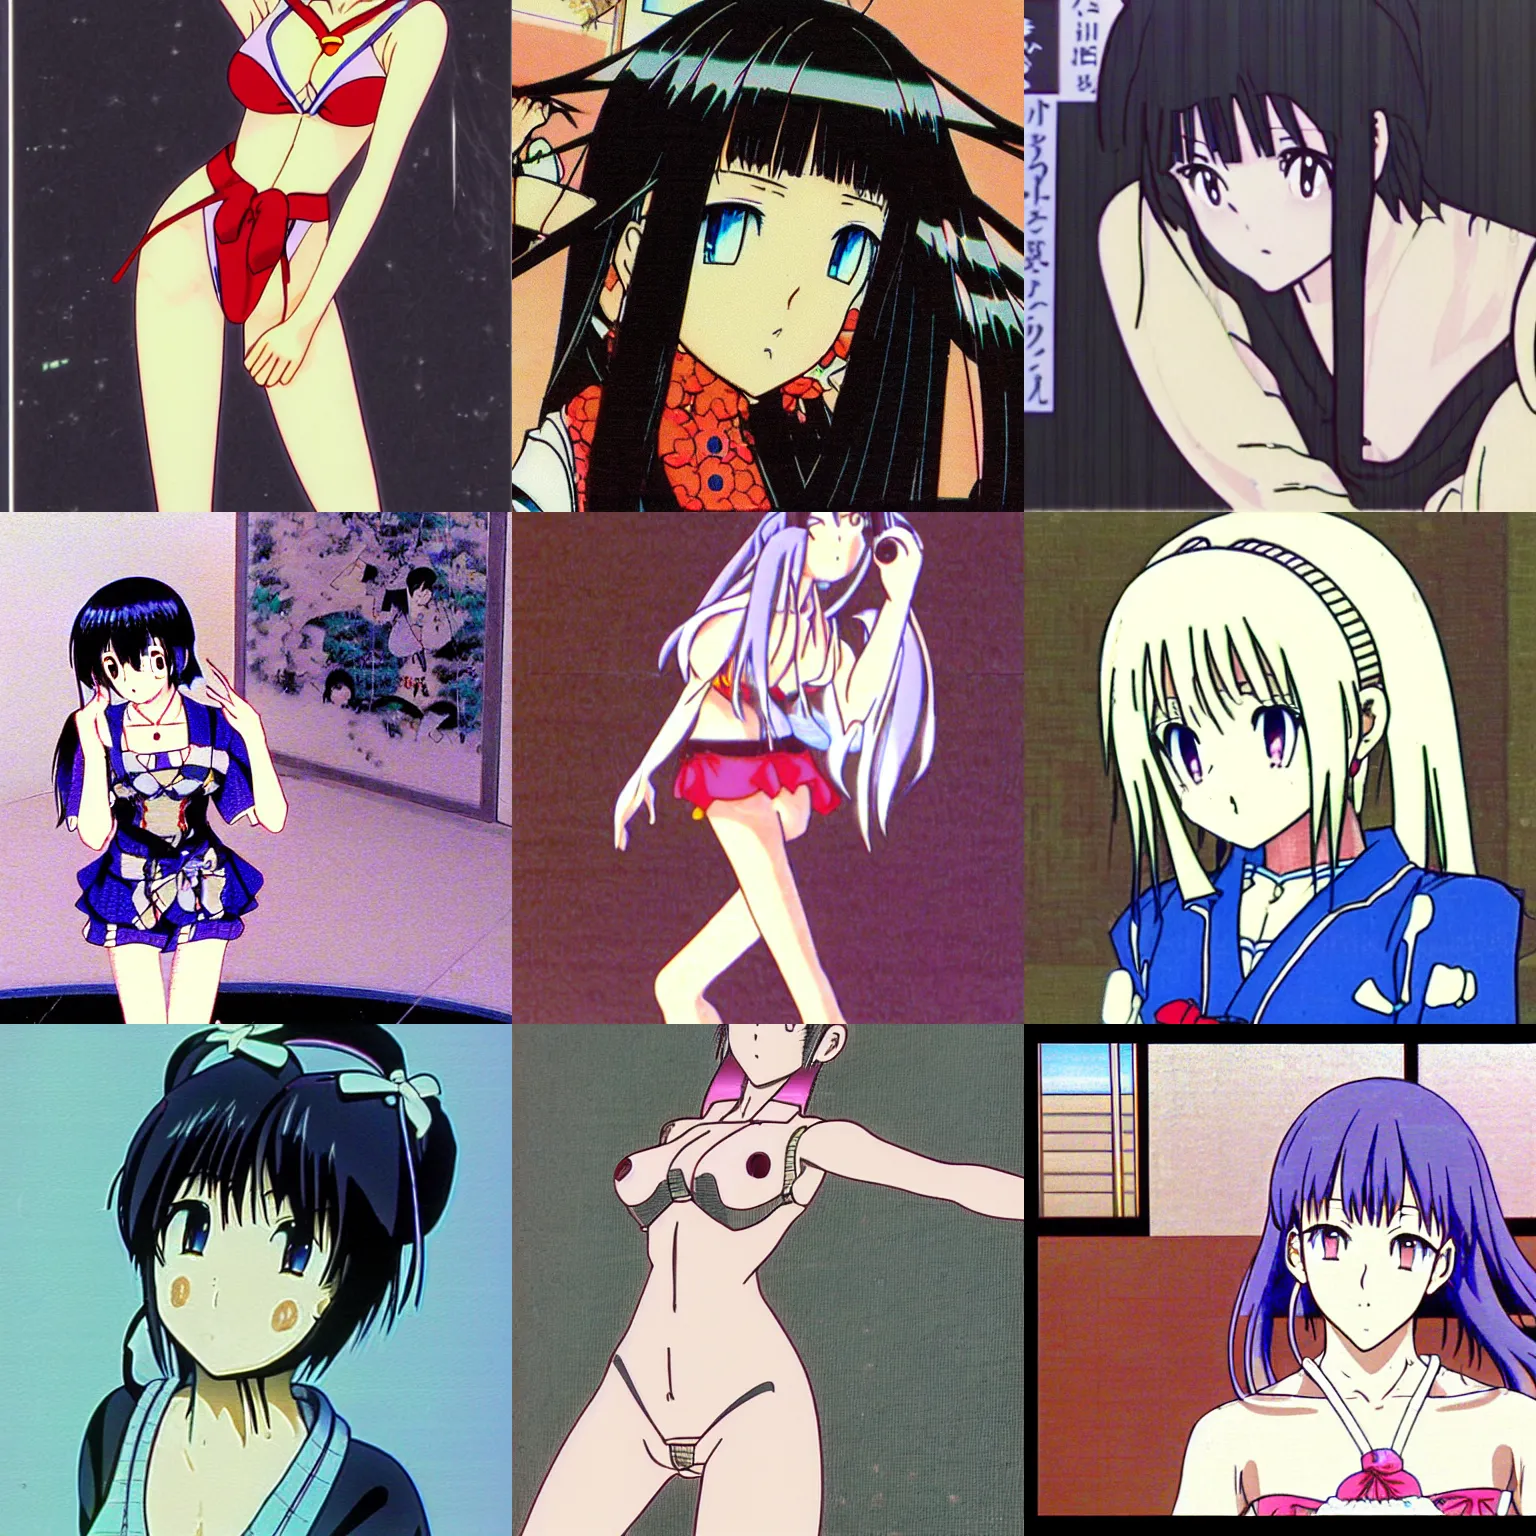 Prompt: a frame of the anime Video Girl AI by Masakazu Katsura (1990)